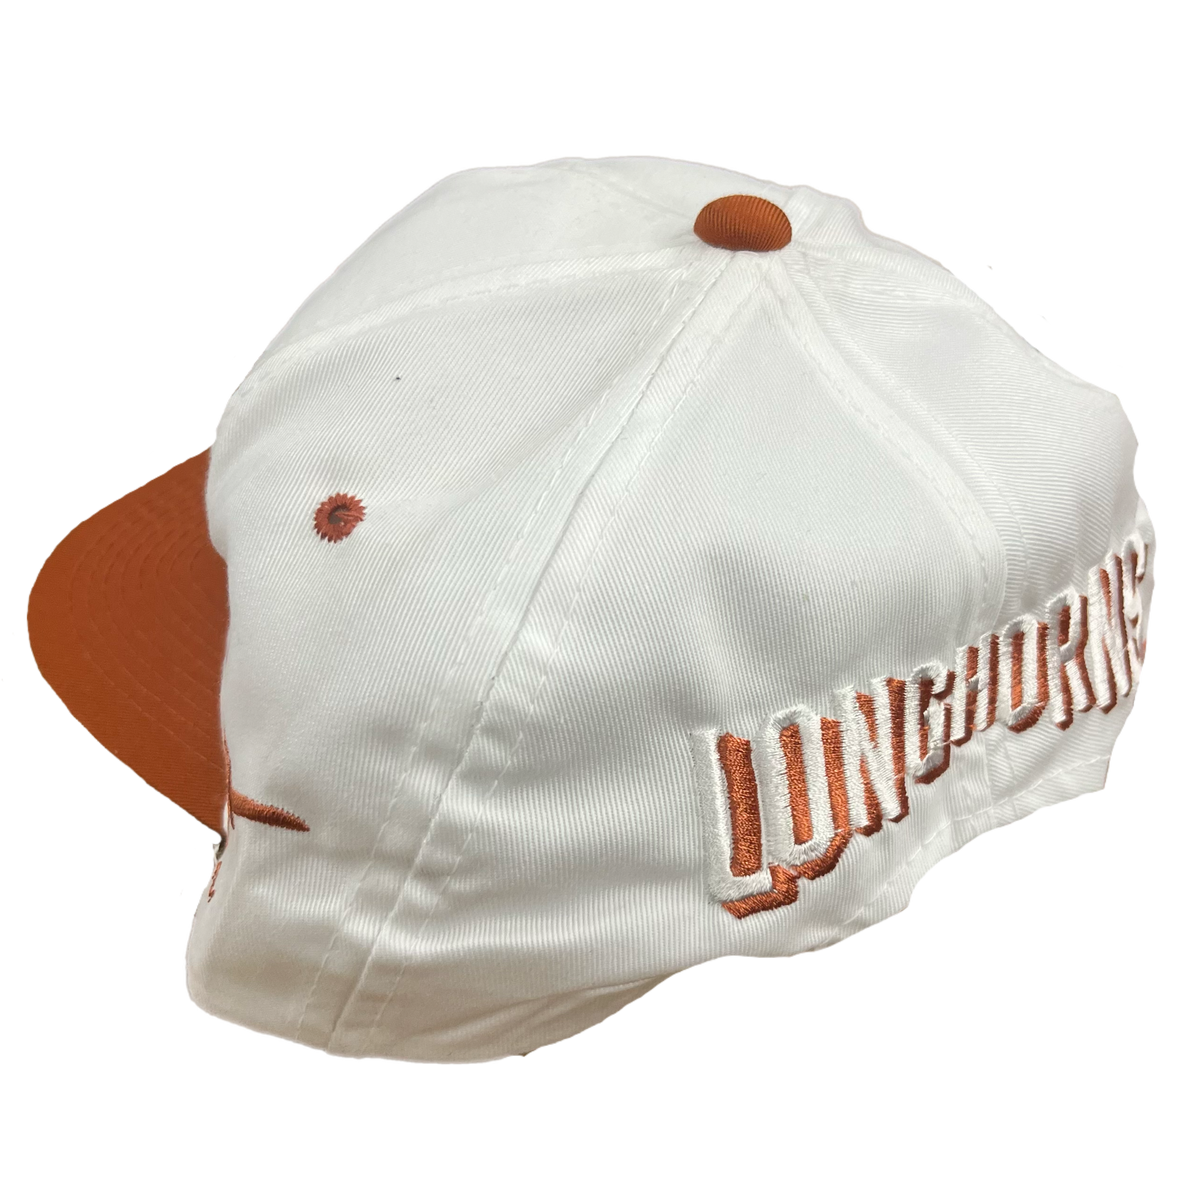 Vintage University Of Texas &quot;Longhorns&quot; NCAA Snapback Hat